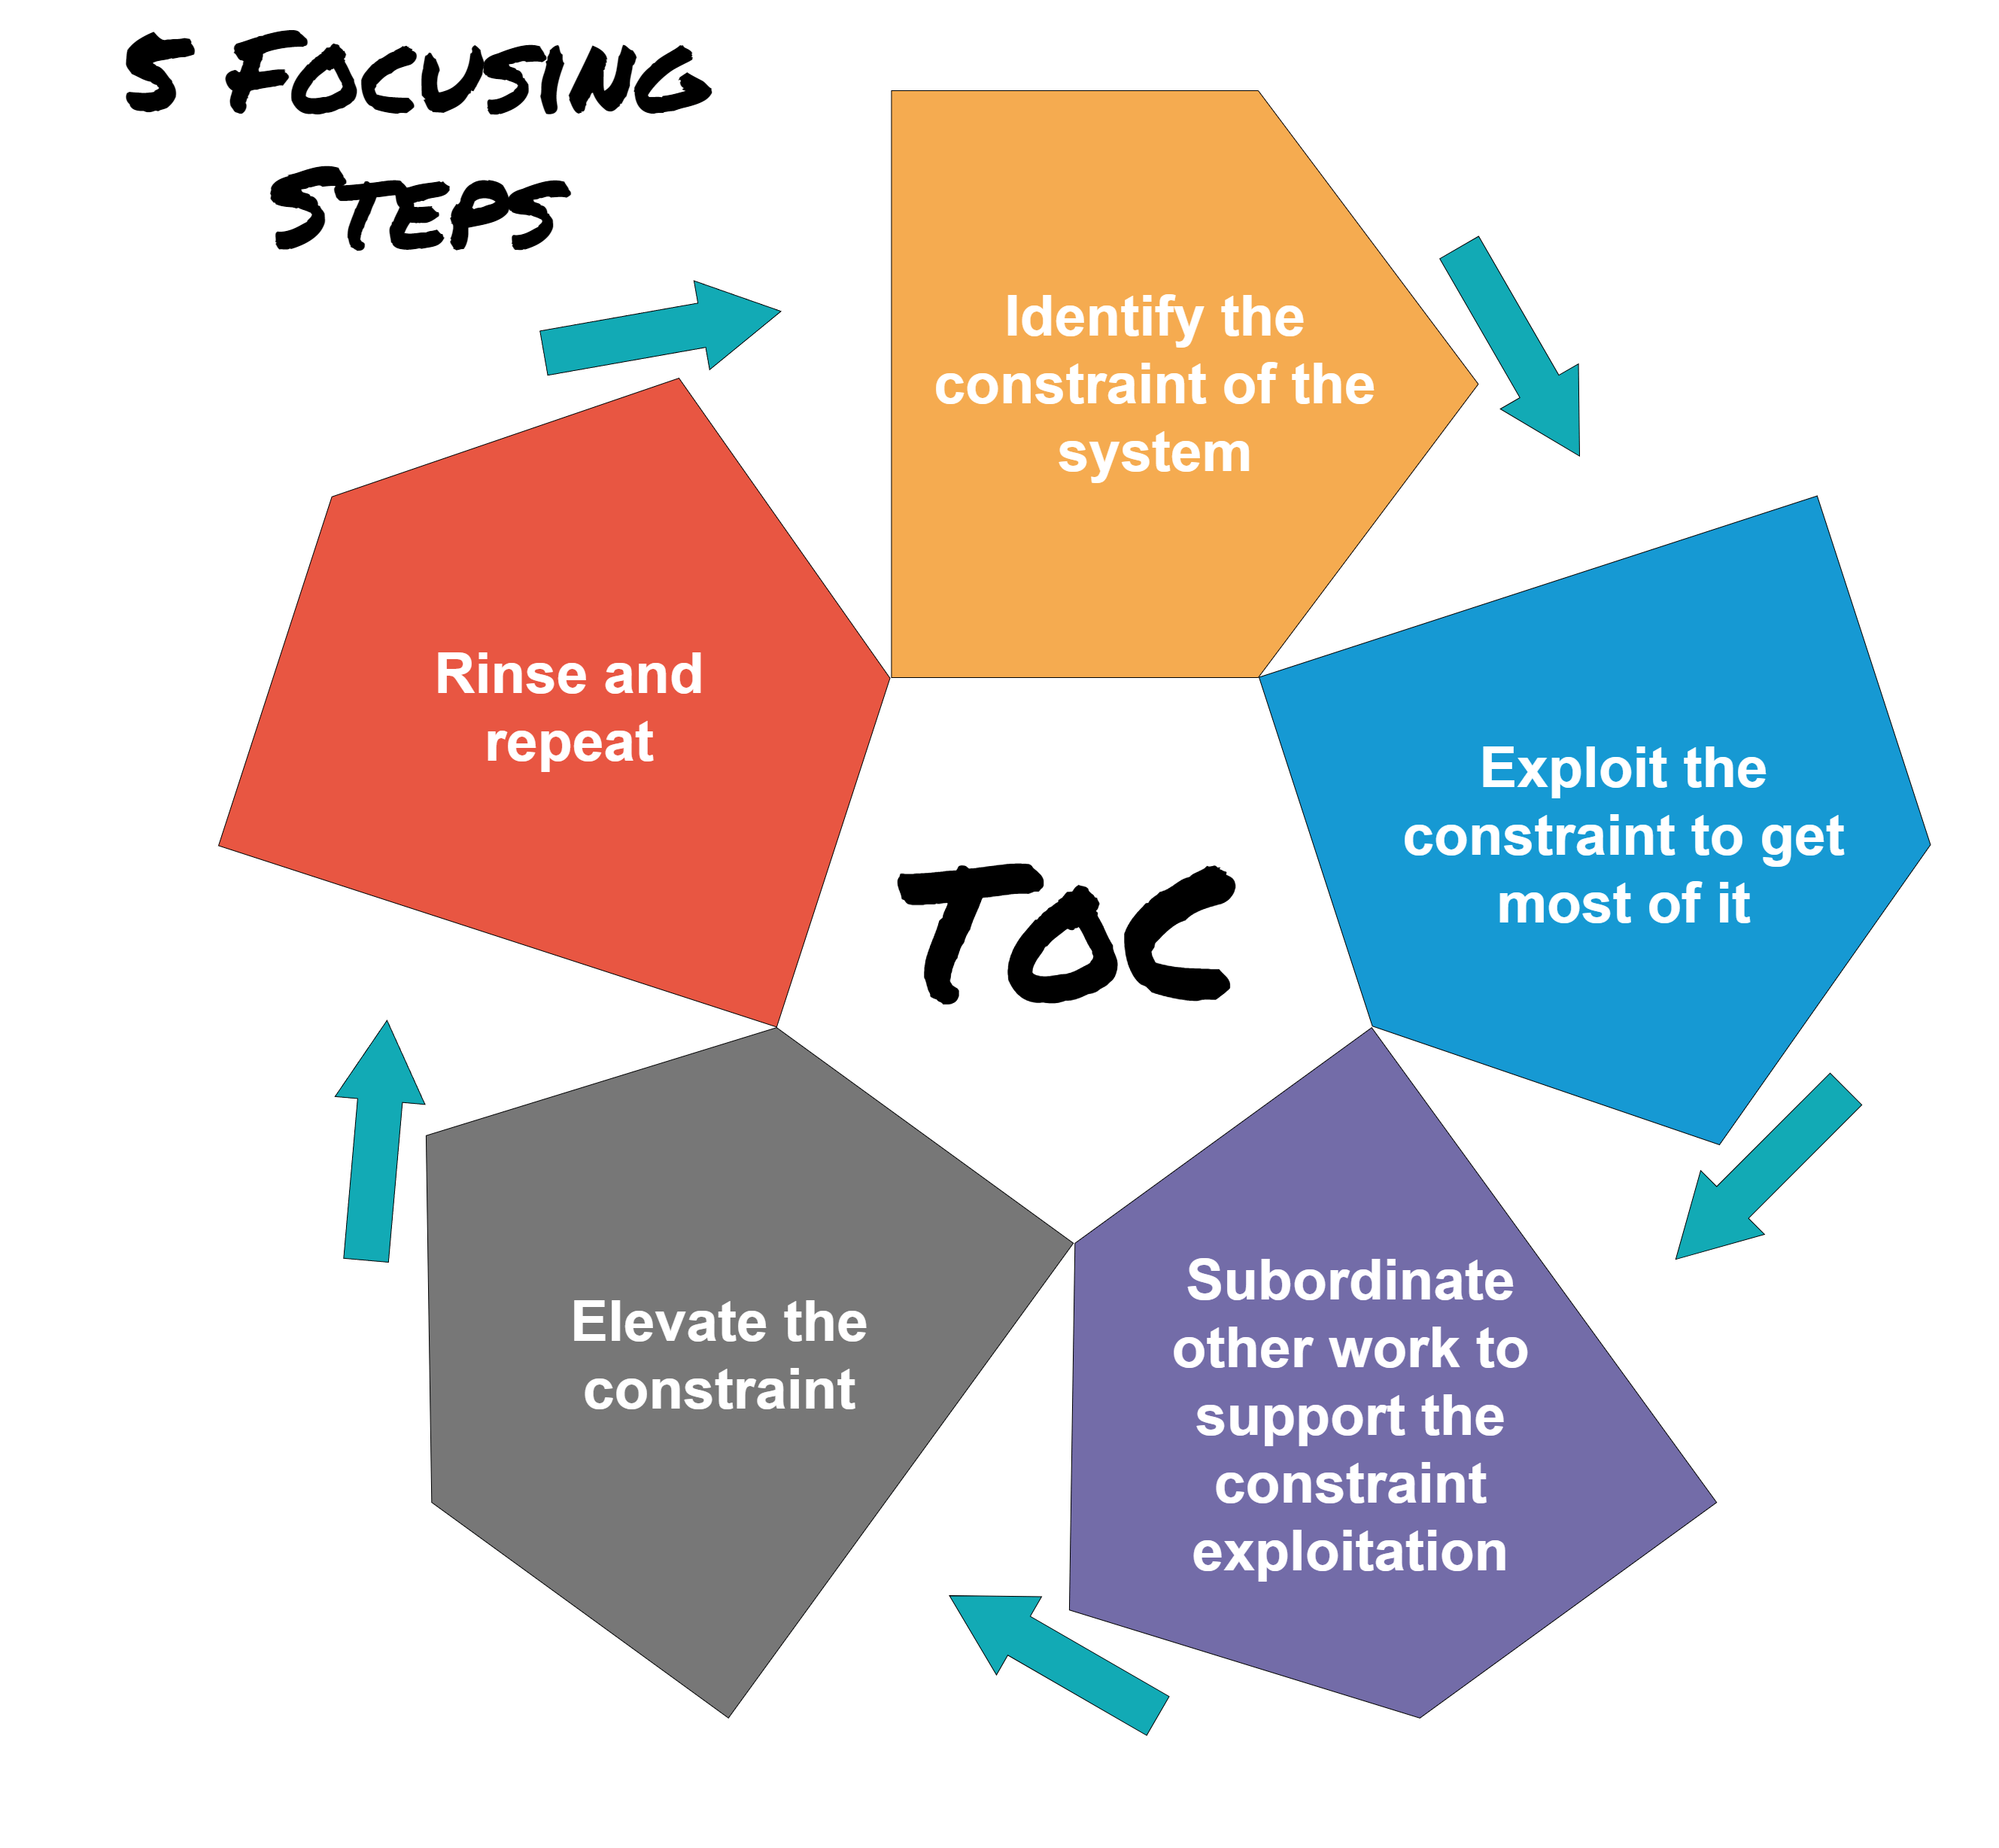 TOC - Five Focusing Steps